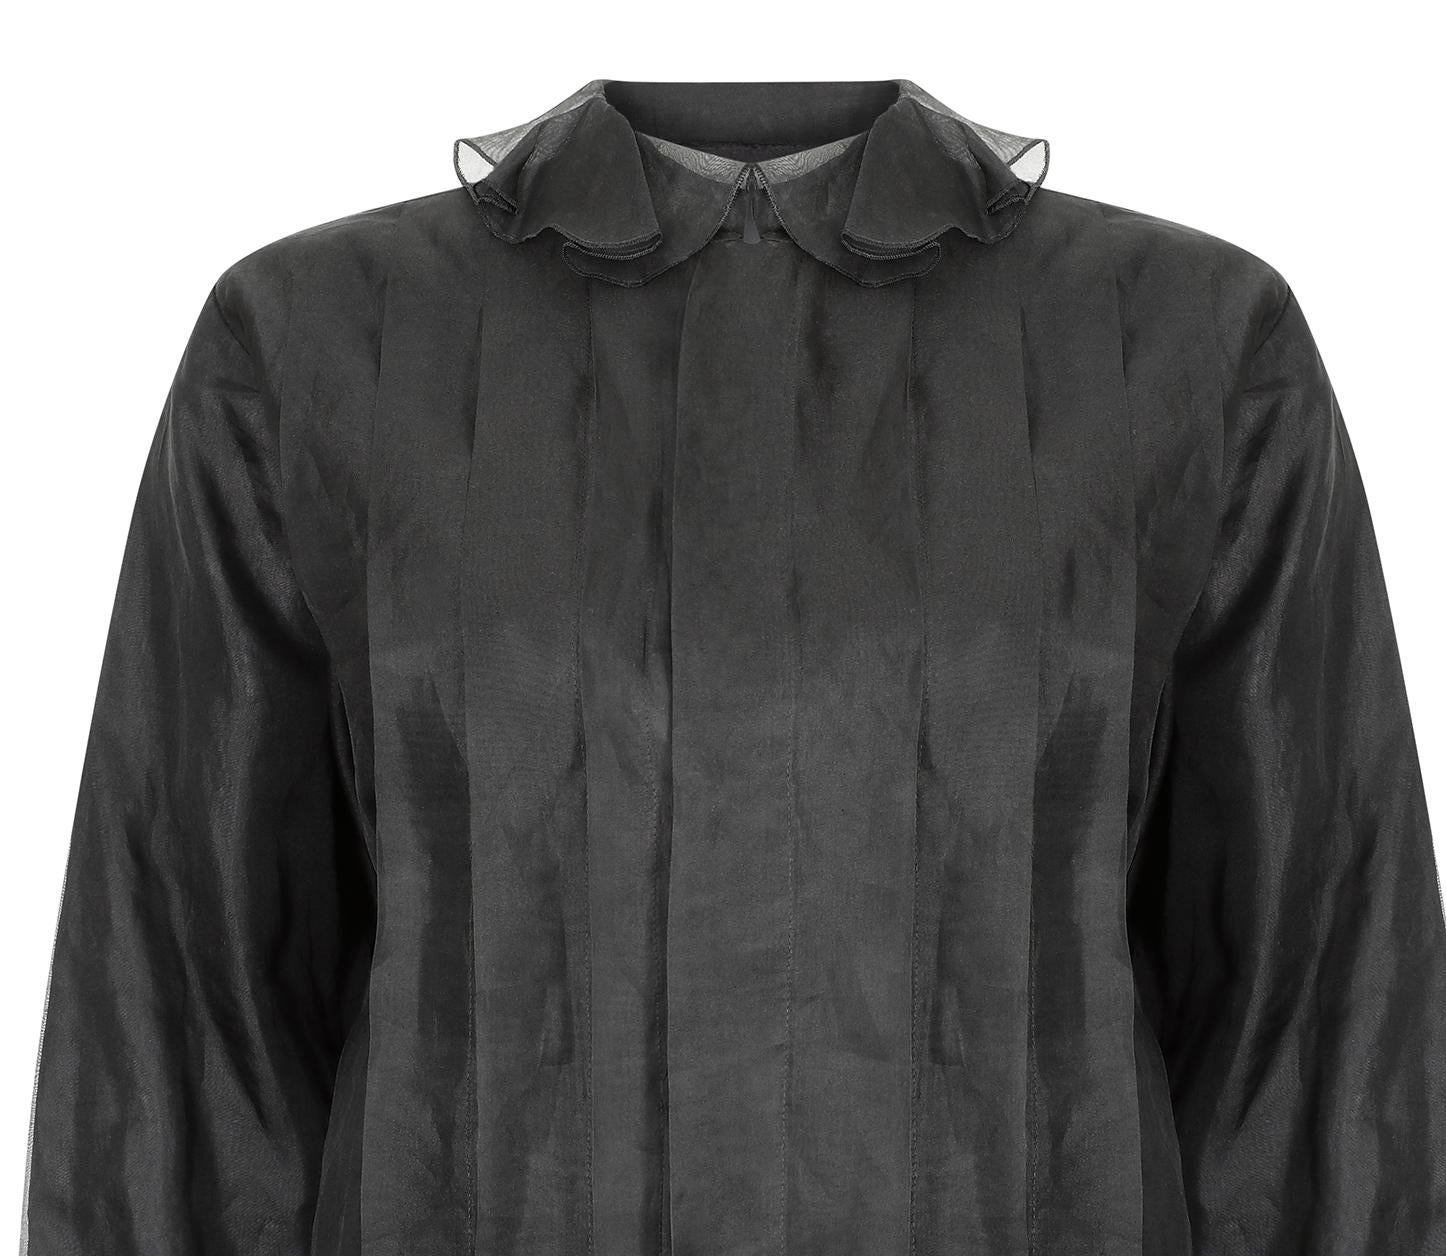 Women's 1970s Black Chiffon Ruffle Collar Blouse For Sale